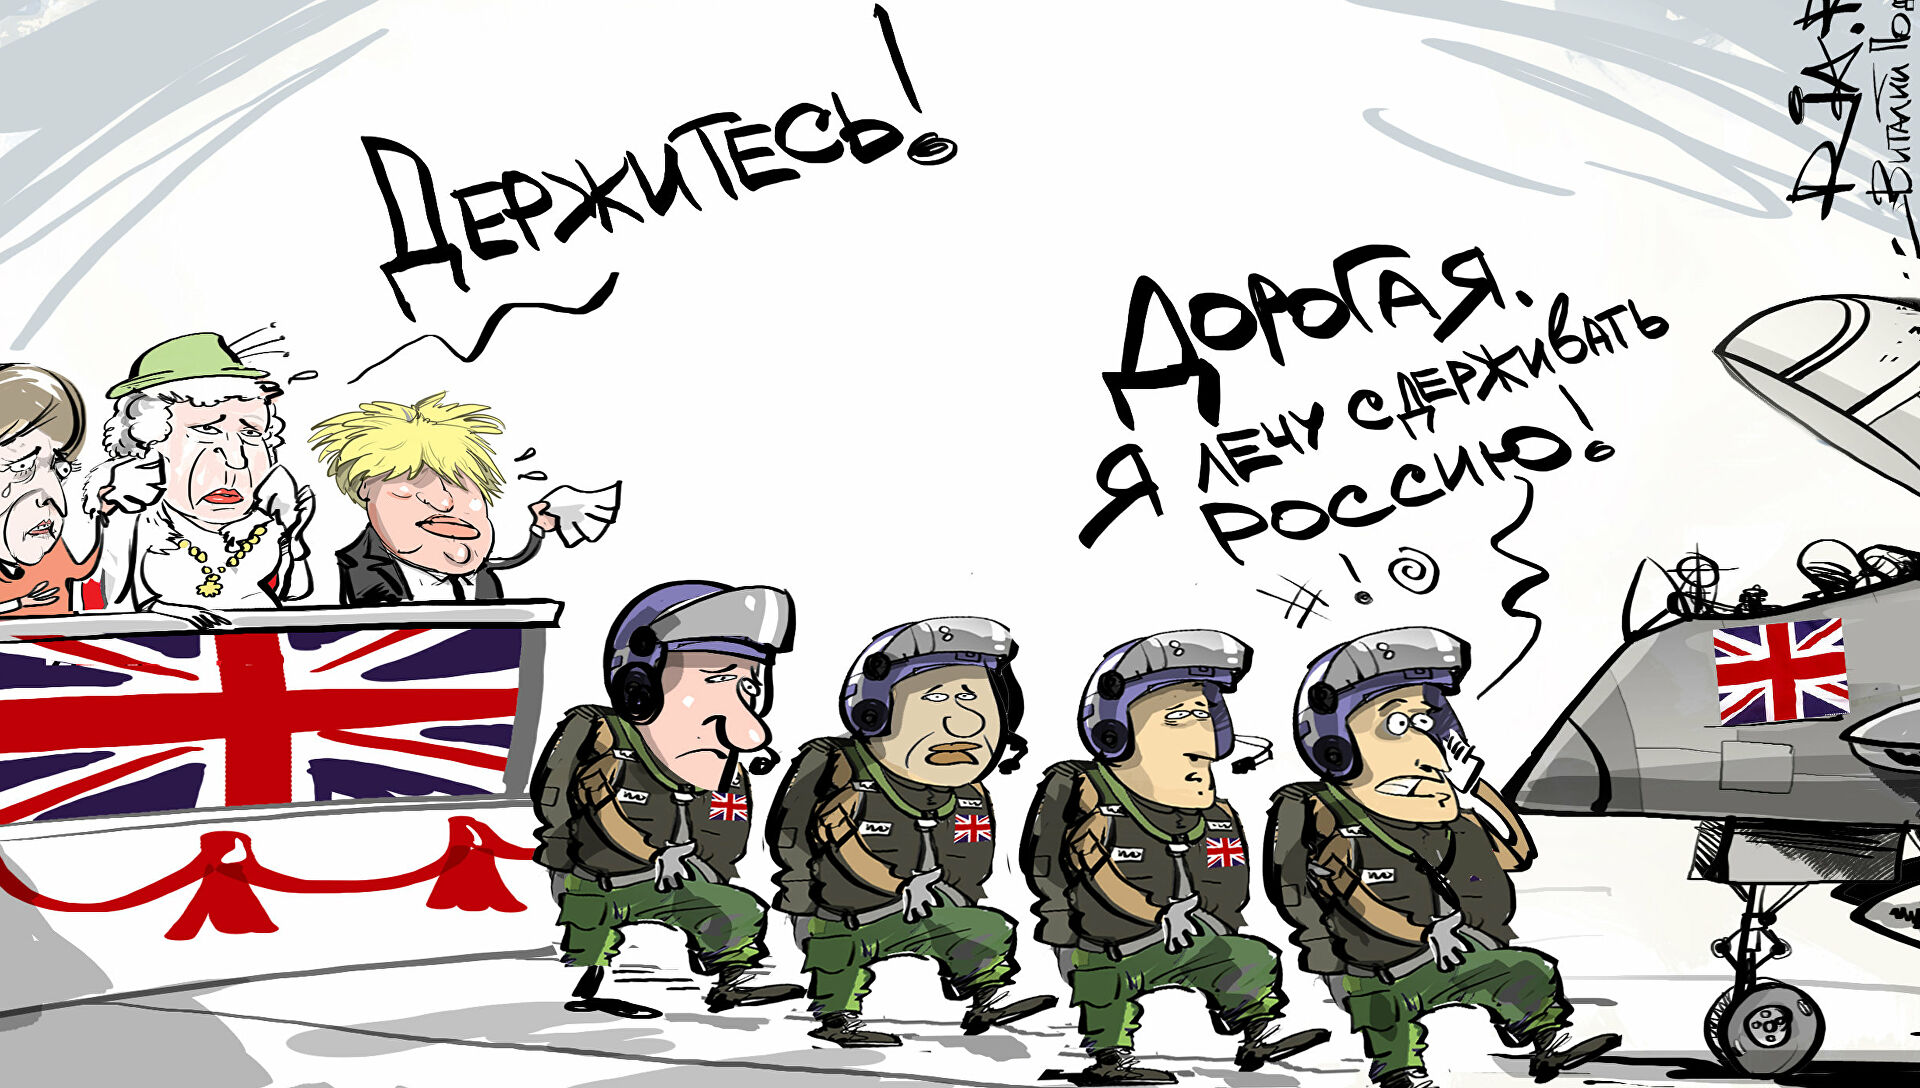 Сша и британия стоят за терактом. Британия карикатура. Политические карикатуры. Военные карикатуры. Карикатуры на американцев.